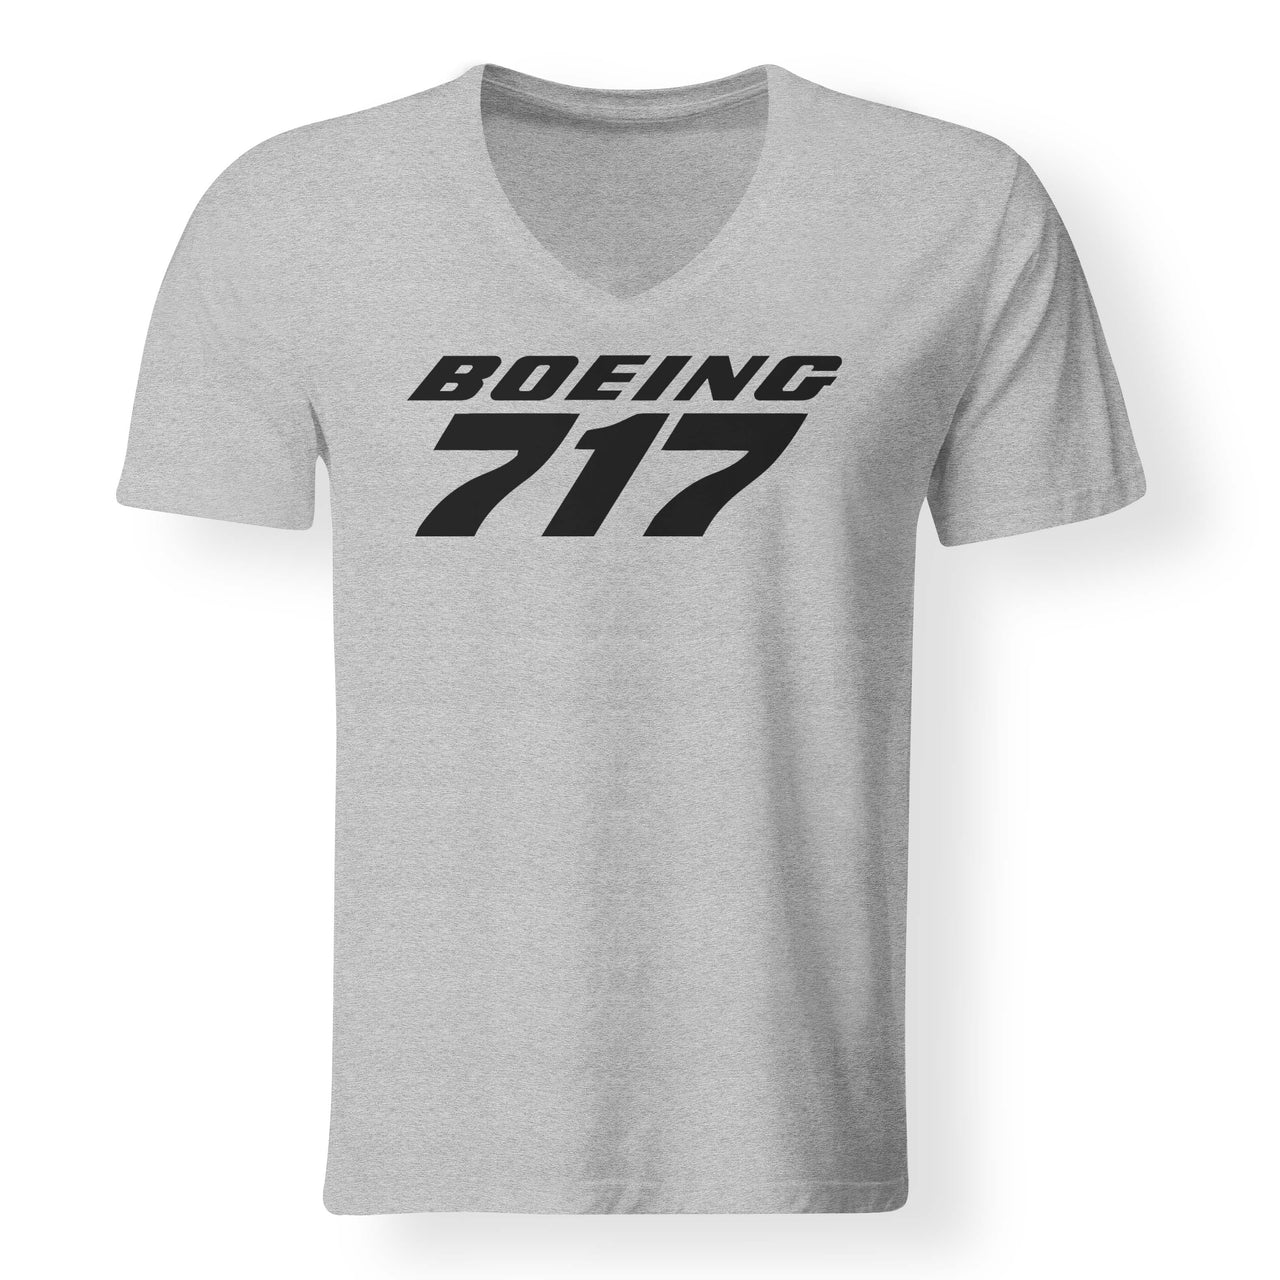 Boeing 717 & Text Designed V-Neck T-Shirts